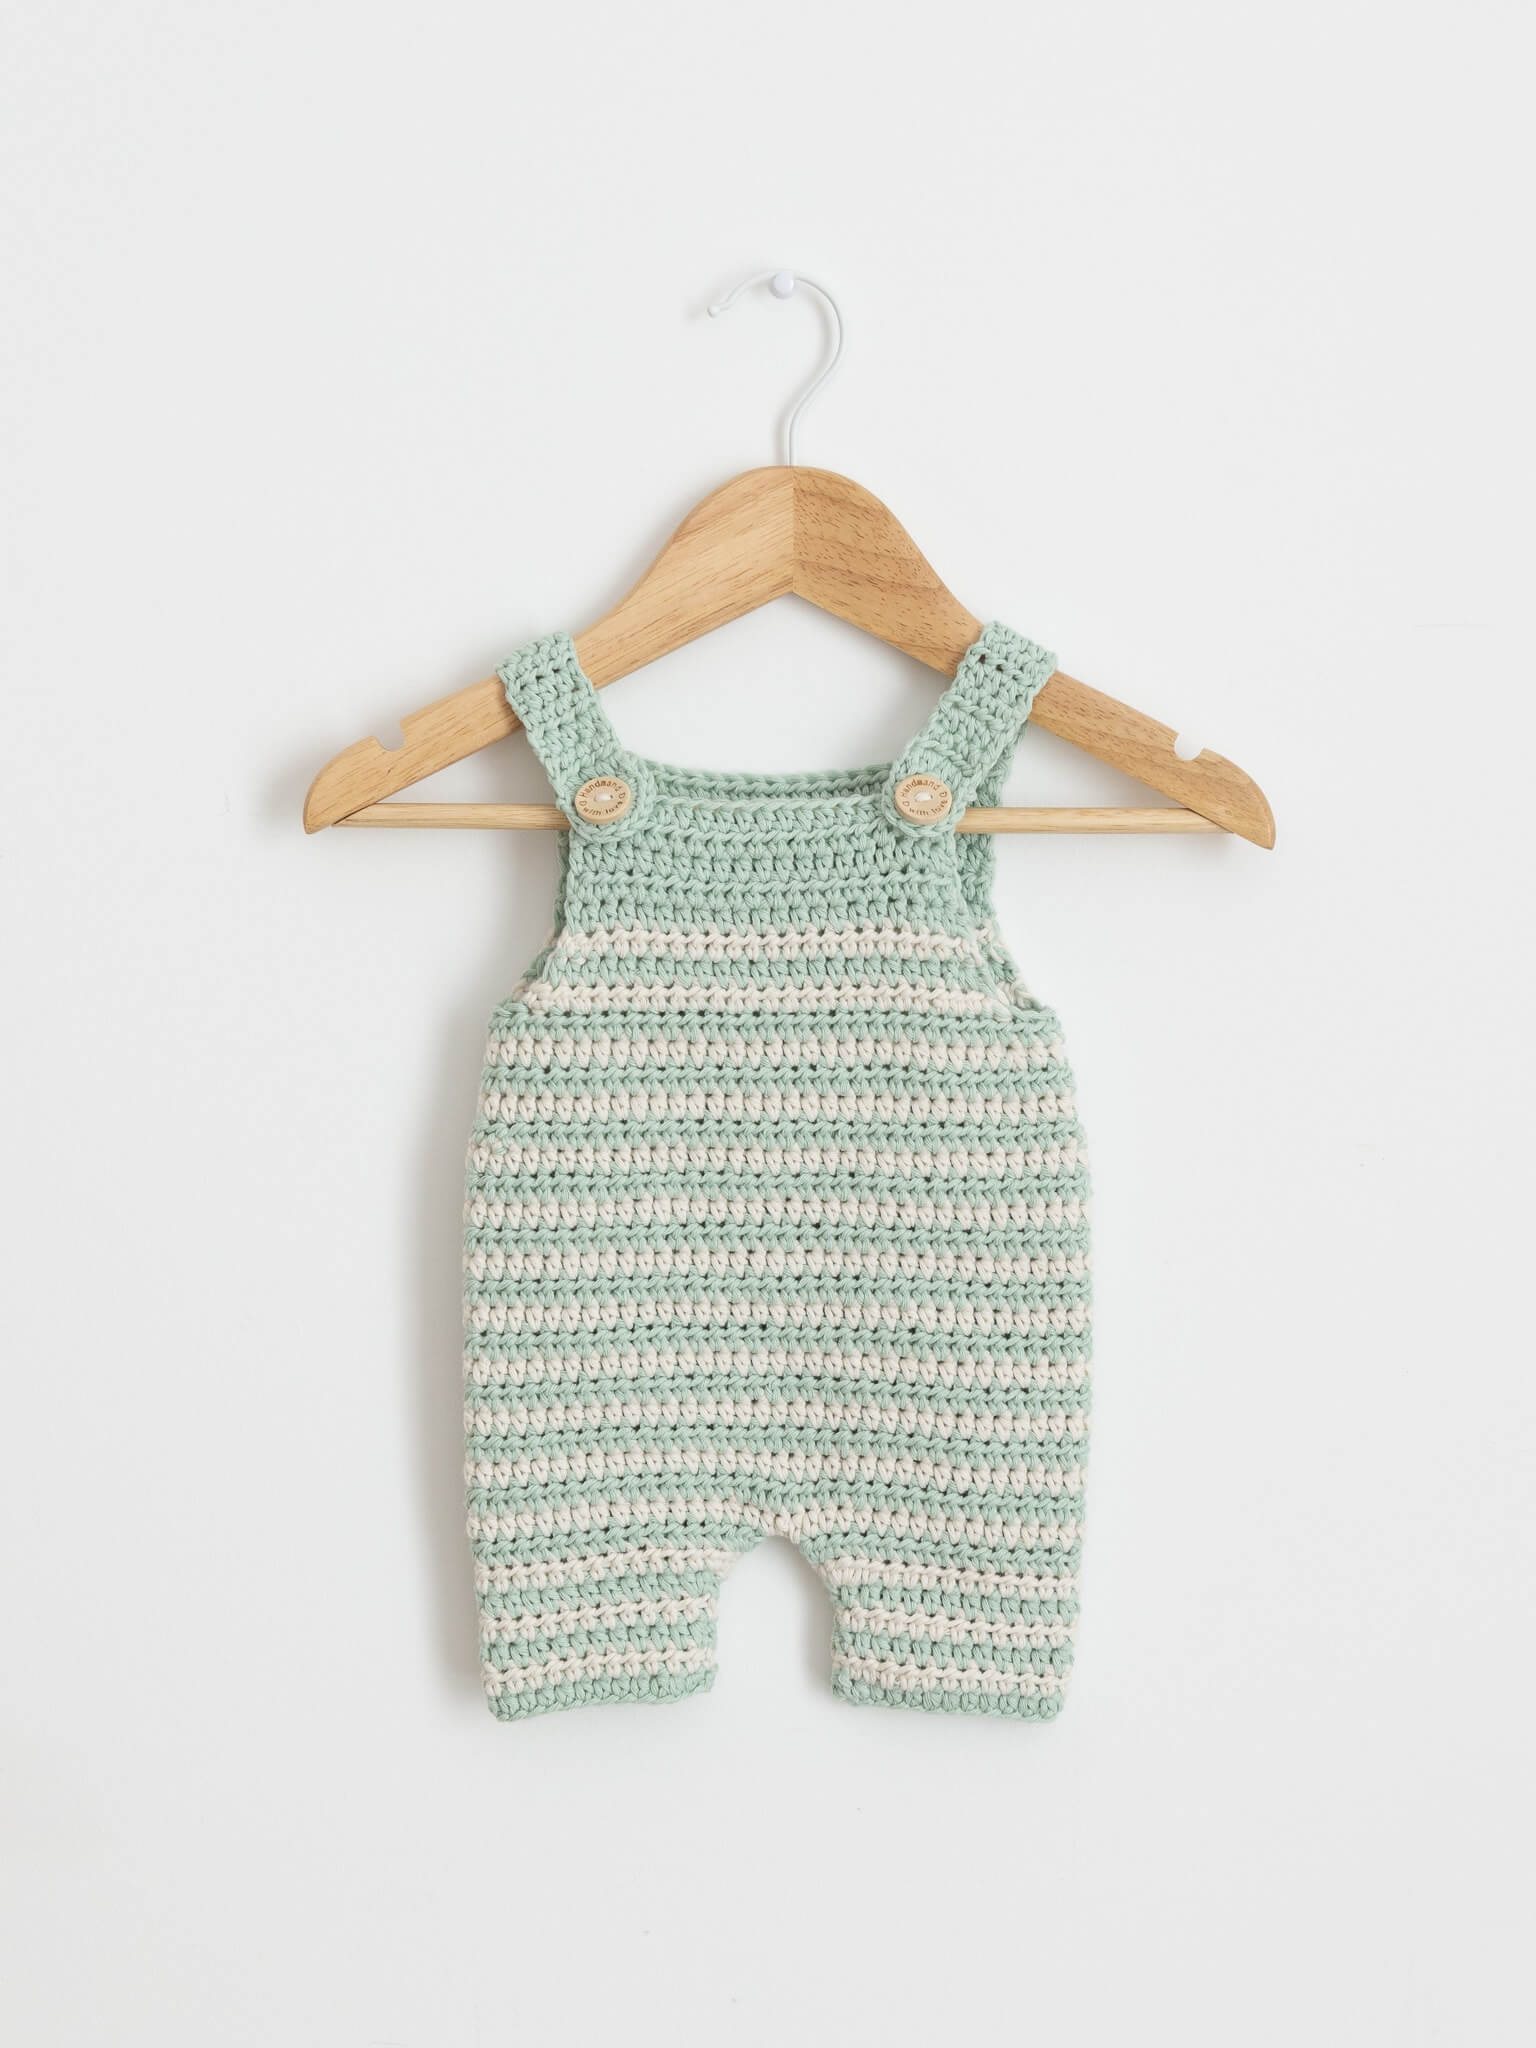 Crochet Rainbow Romper for Baby - [ FREE Pattern & Tutorial ]